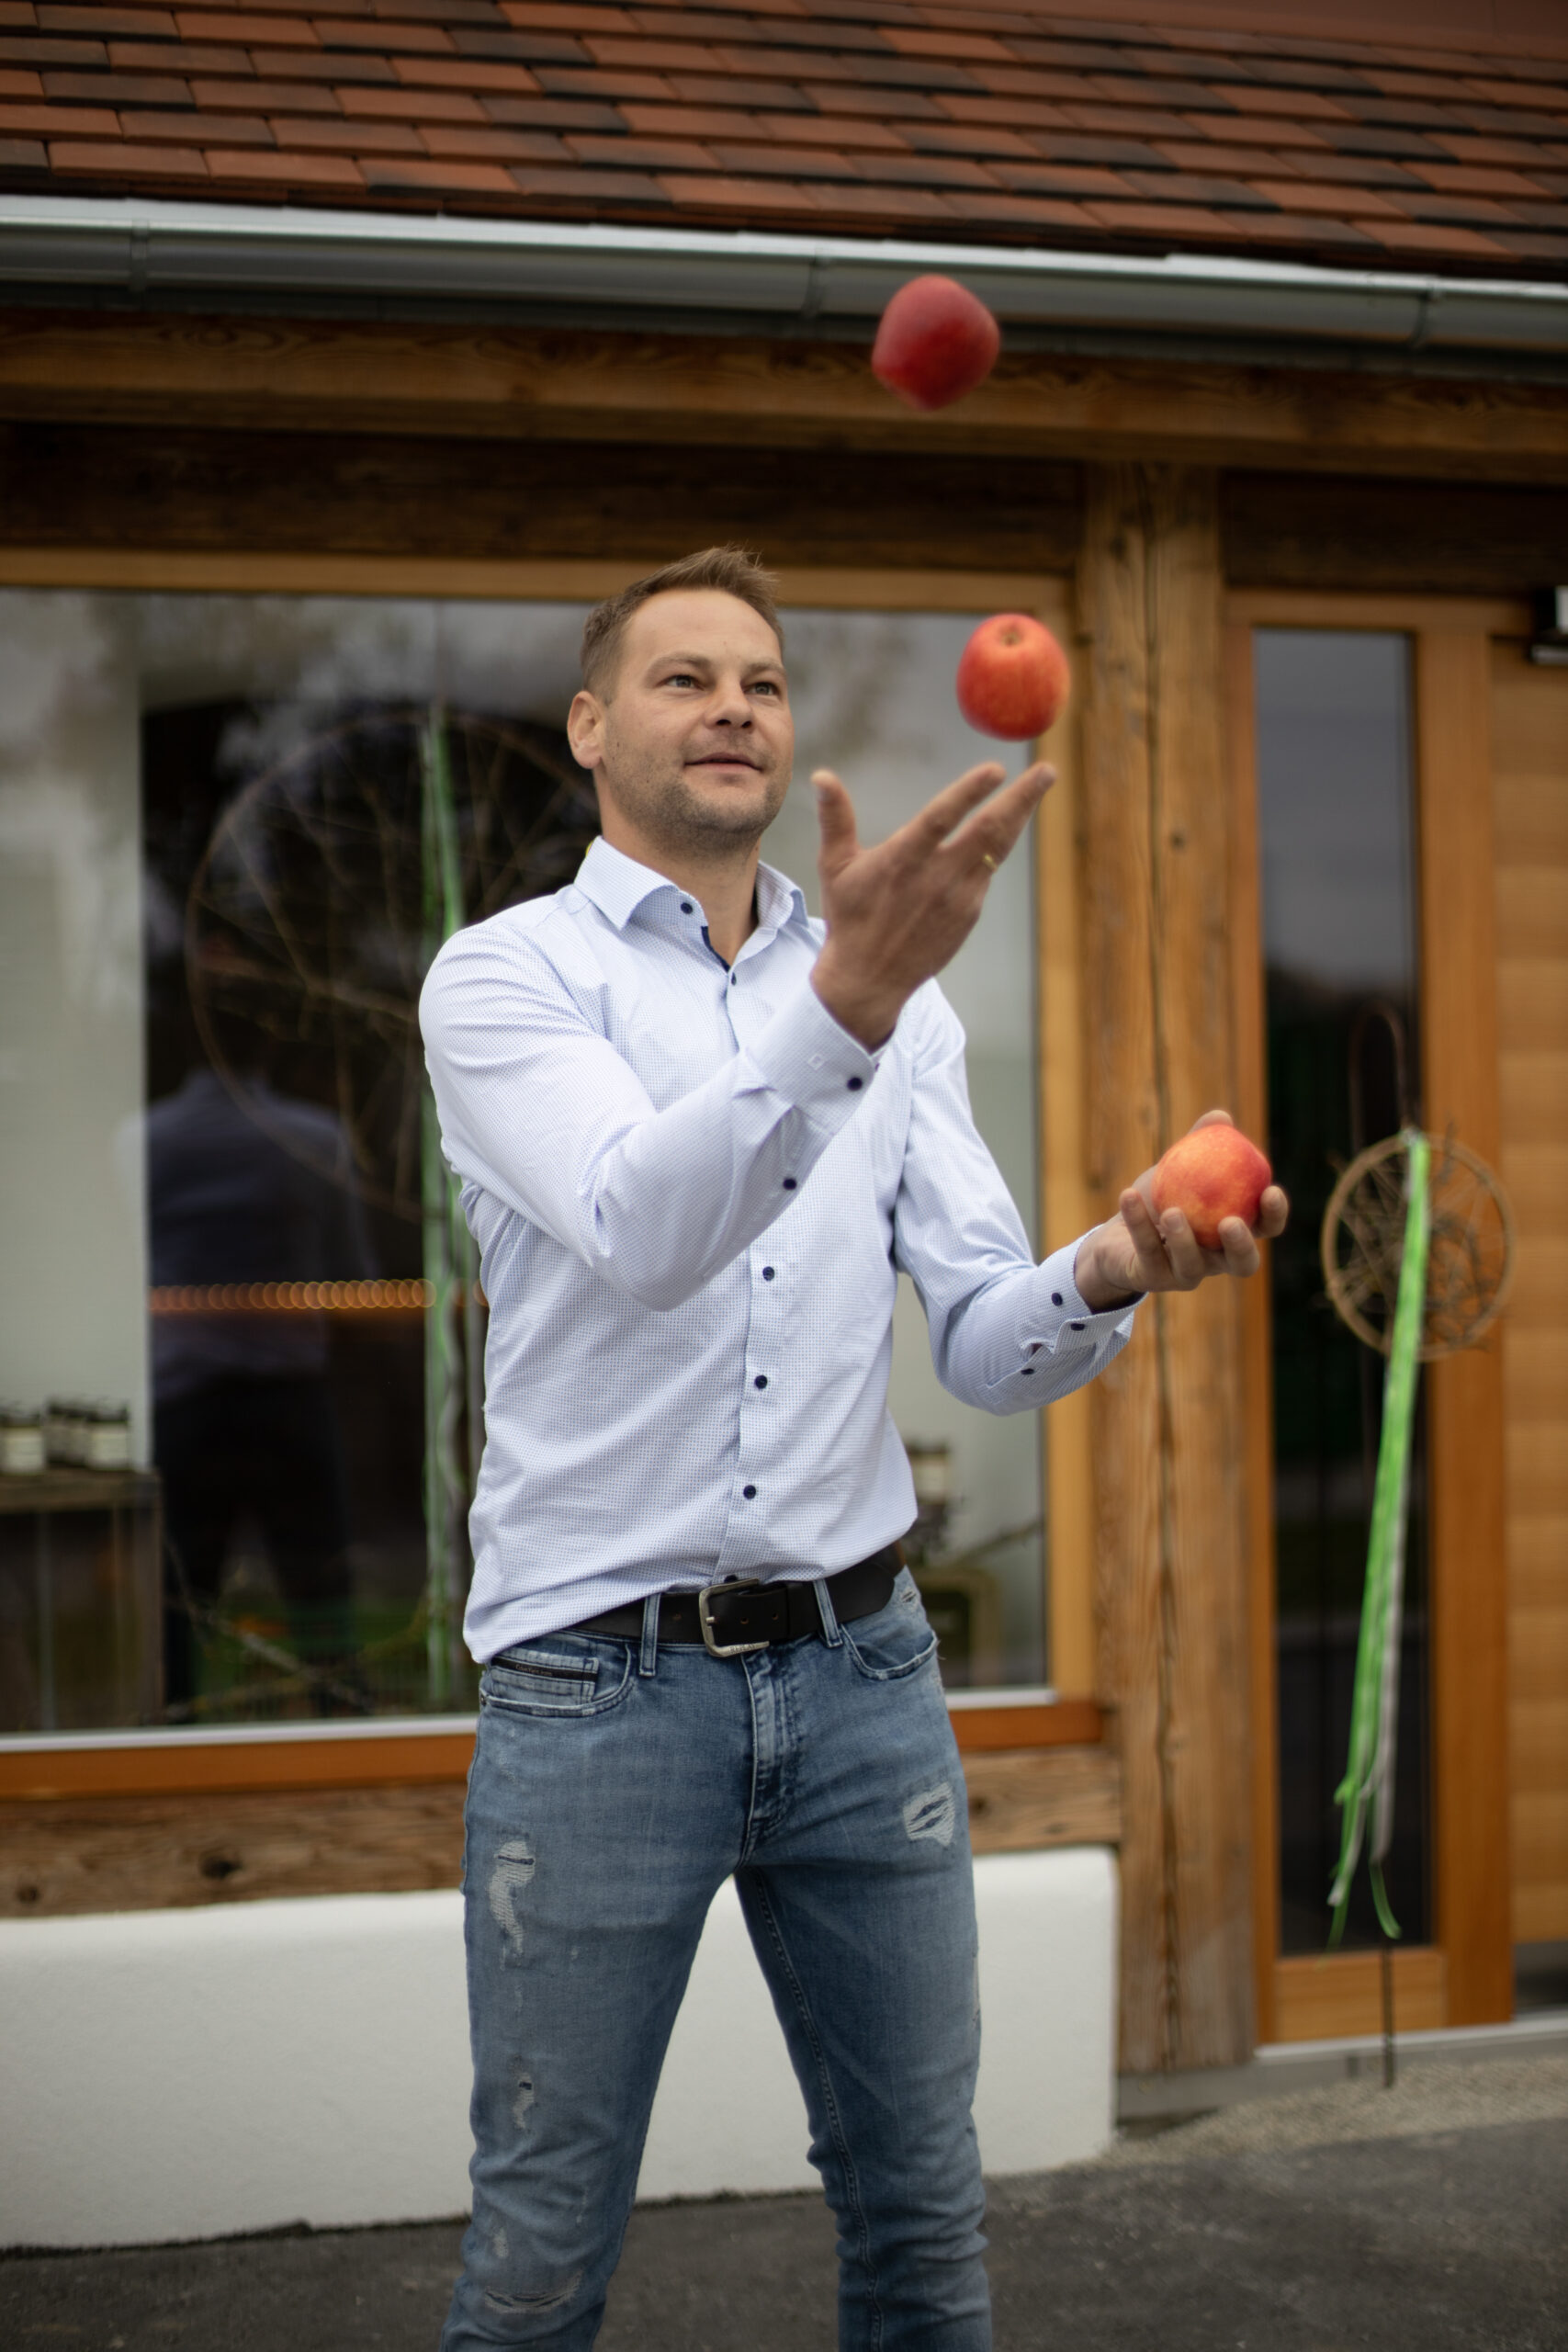 Richard Eberl jongliert mit frischen Äpfel